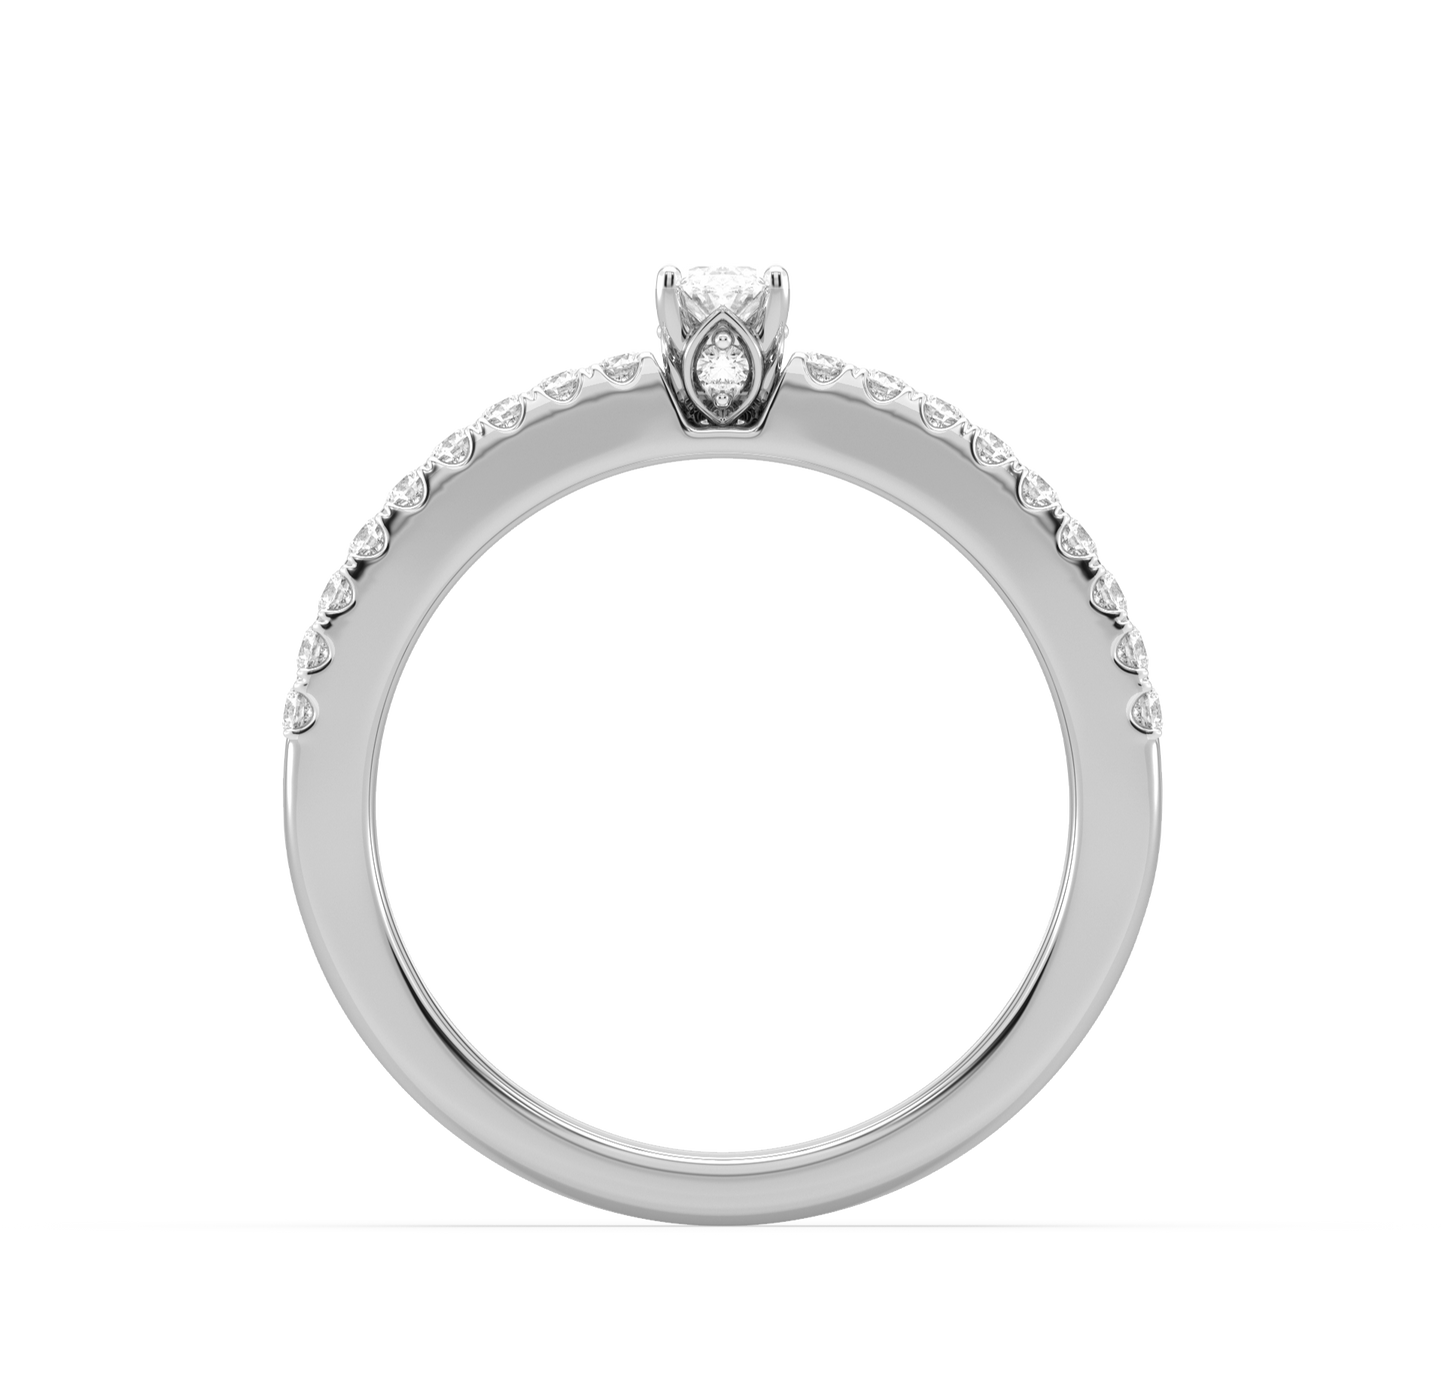 Customised ring RG21004-PH21025